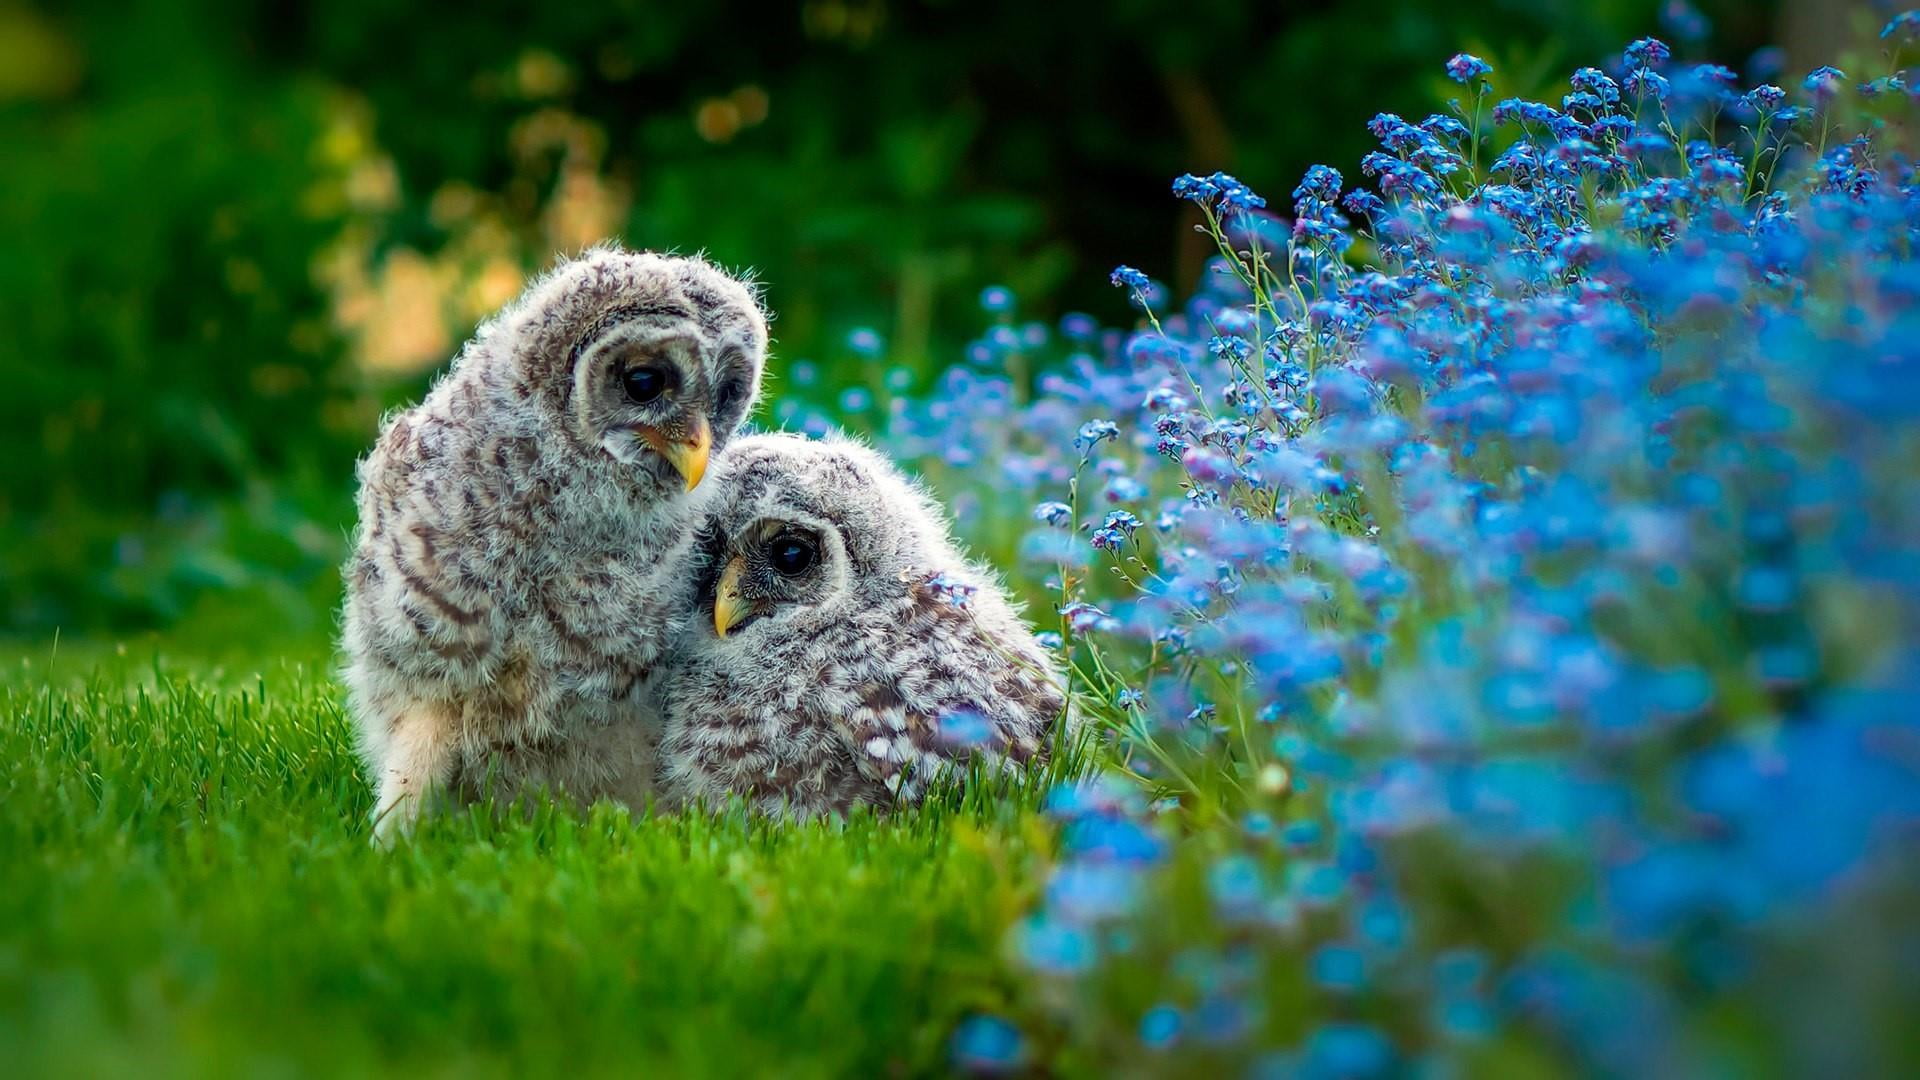 owl, bird, blue flowers, grass, wildlife, bird of prey, chicks